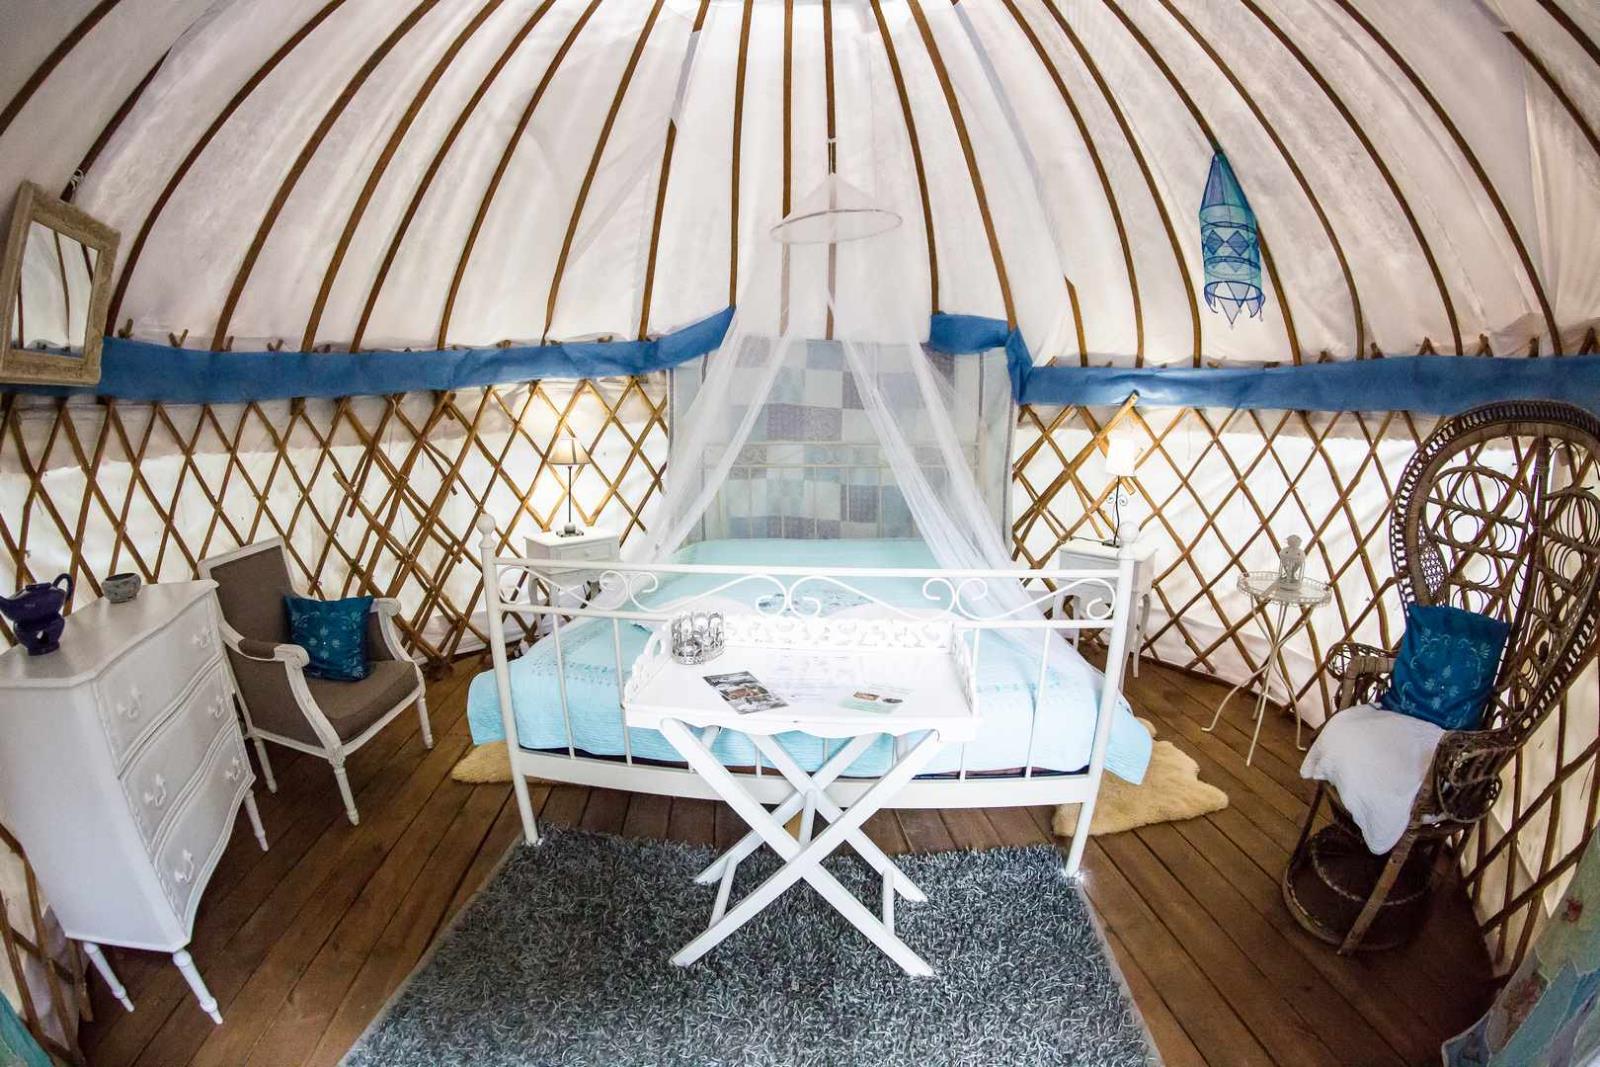 Huuraccommodatie - Romantische Mongoolse Tent - Zonder Privé Sanitair - Camping Mille Etoiles